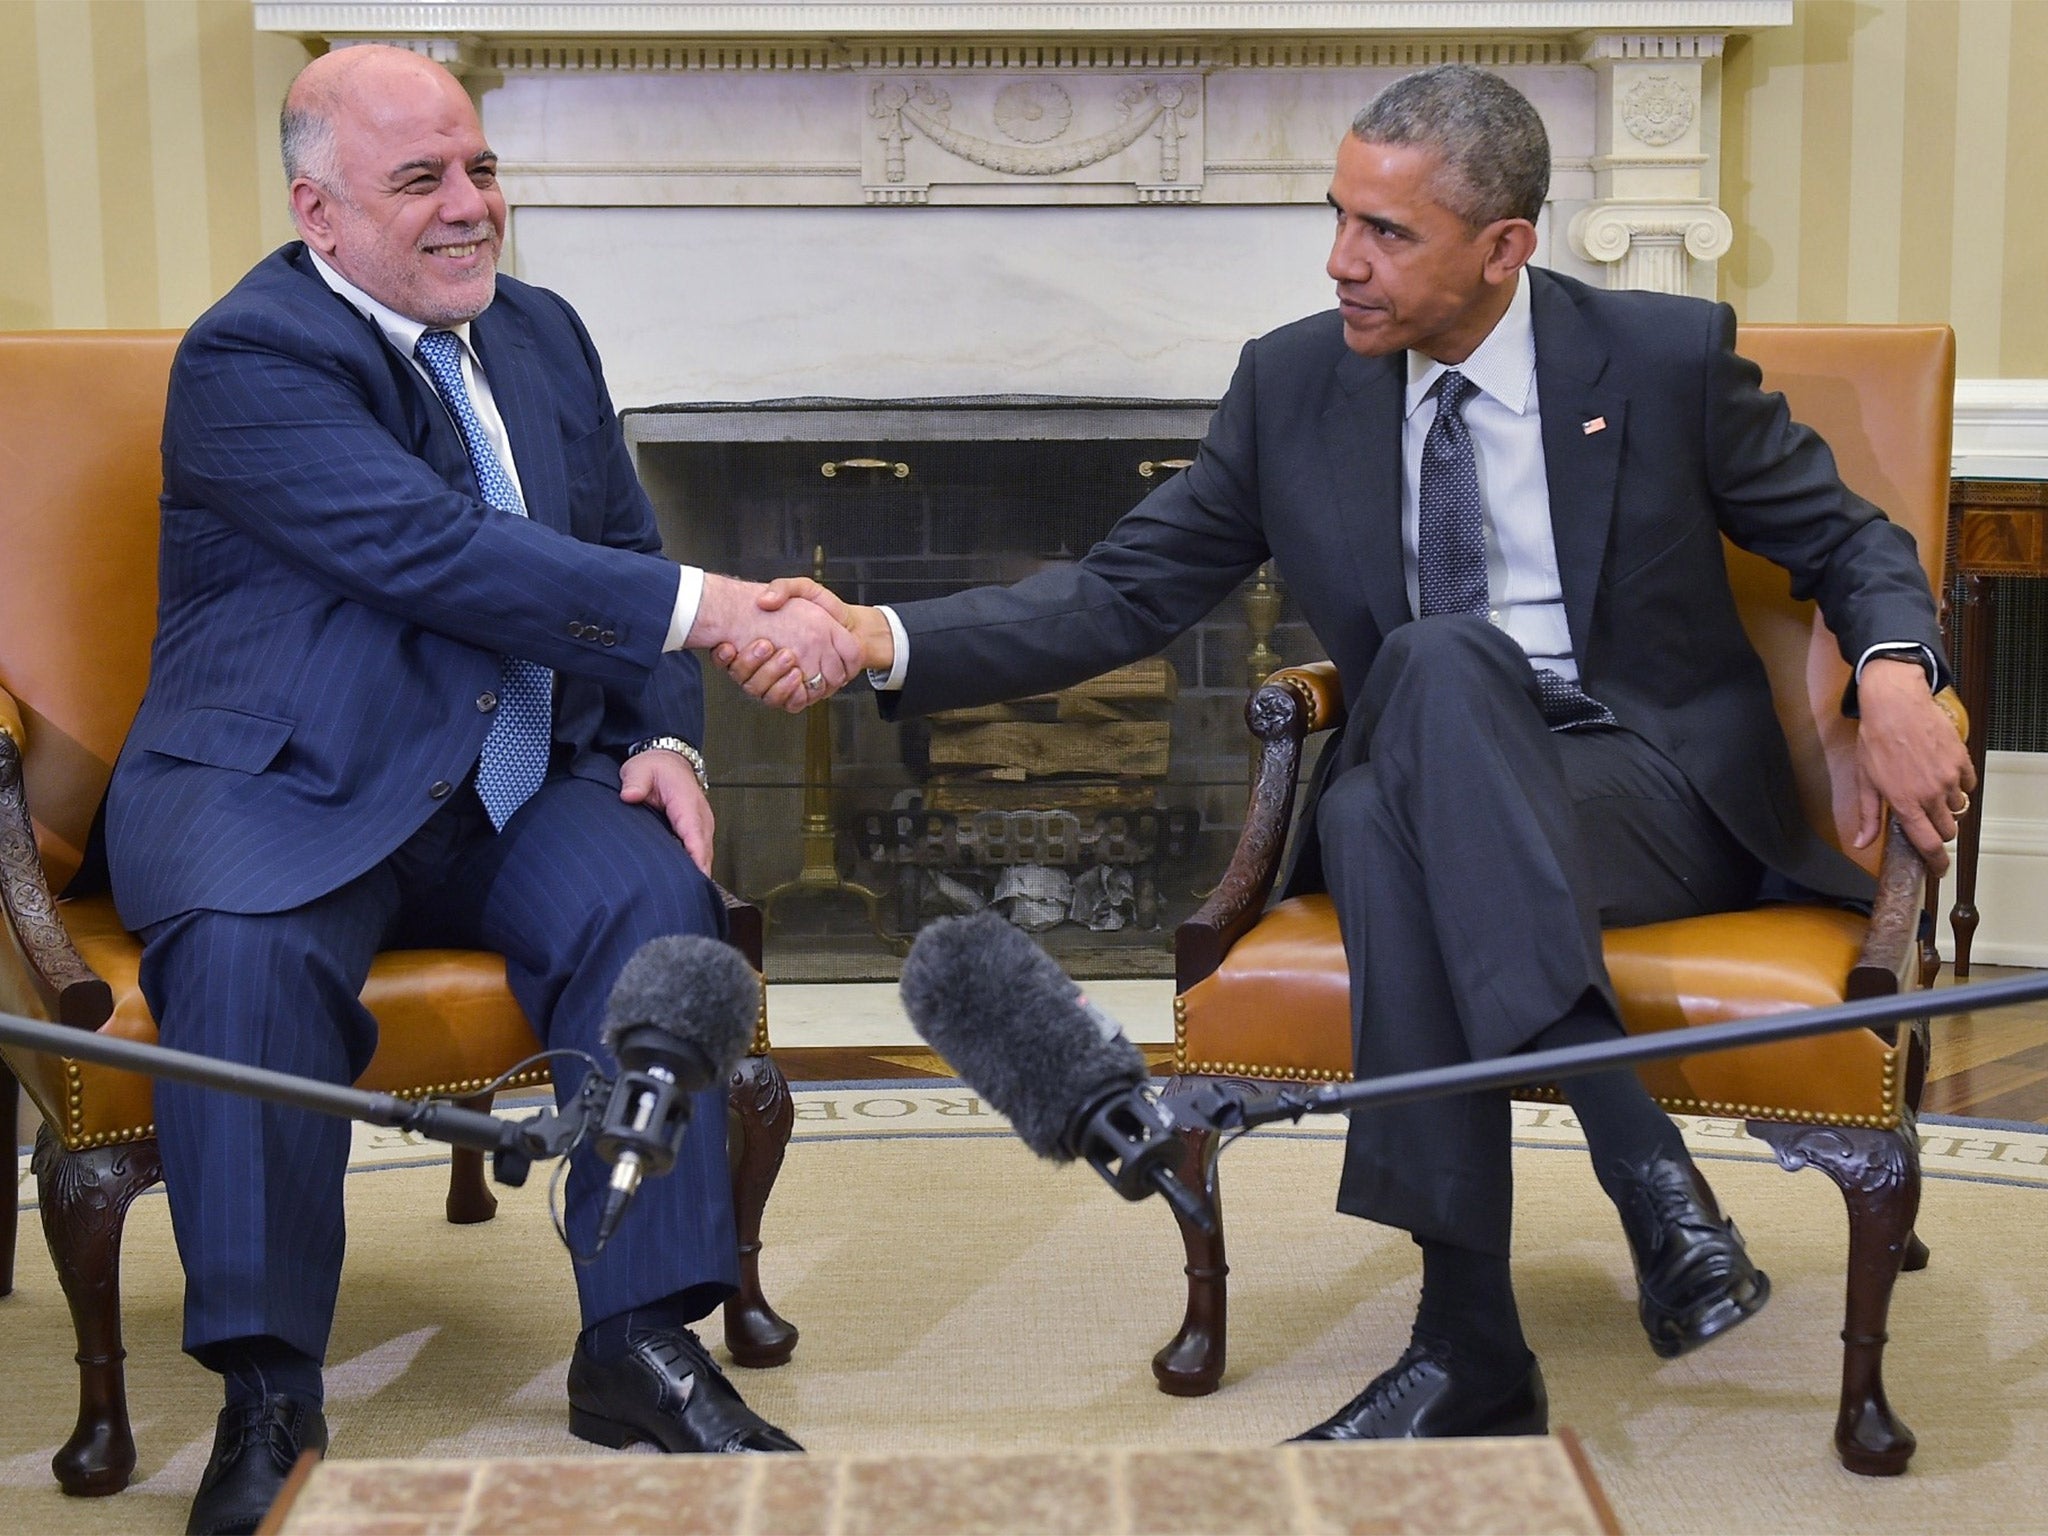 Barack Obama shakes hands with Haider al-Abadi on Tuesday